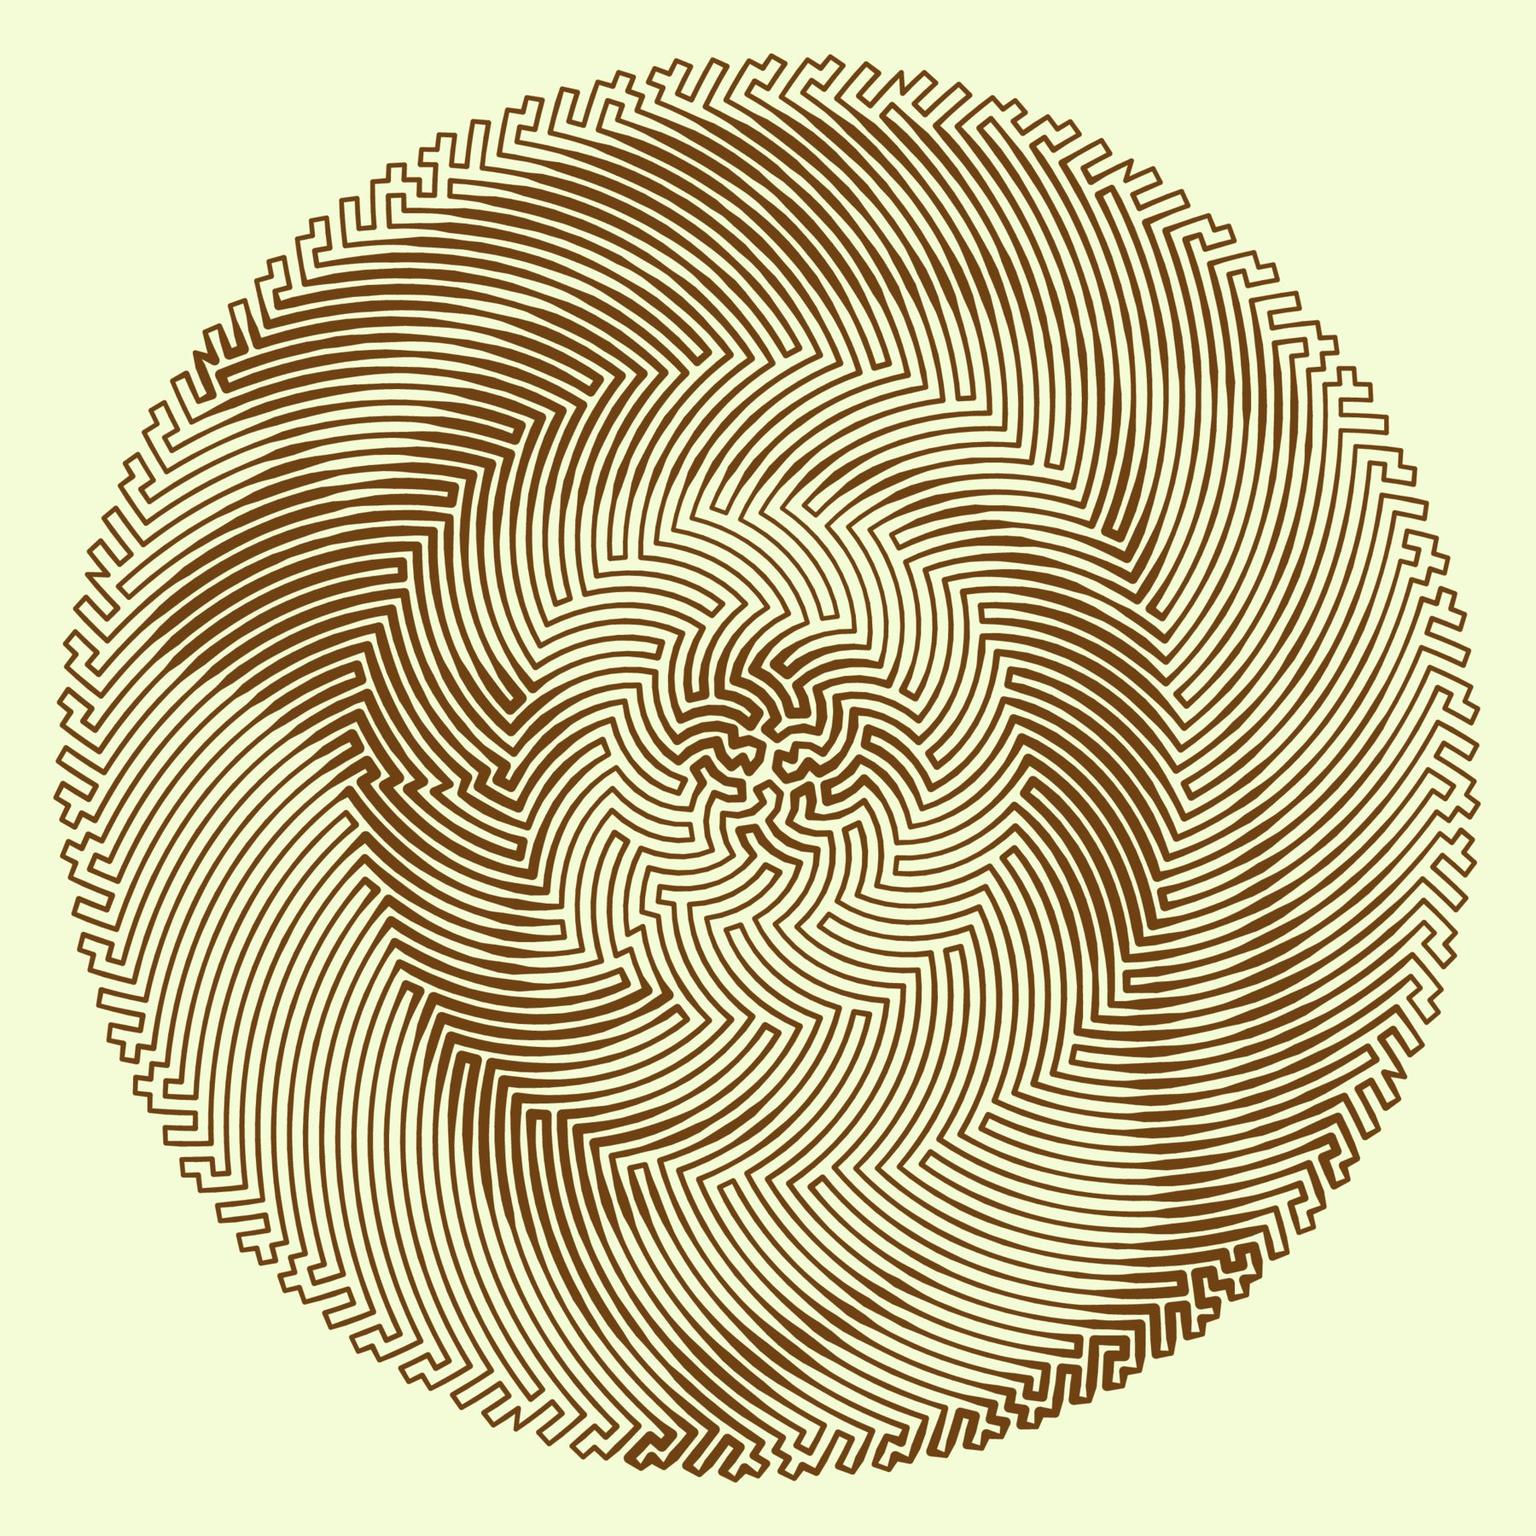 Image for entry 'Phyllotactic TSP Art Portrait of Fibonacci'